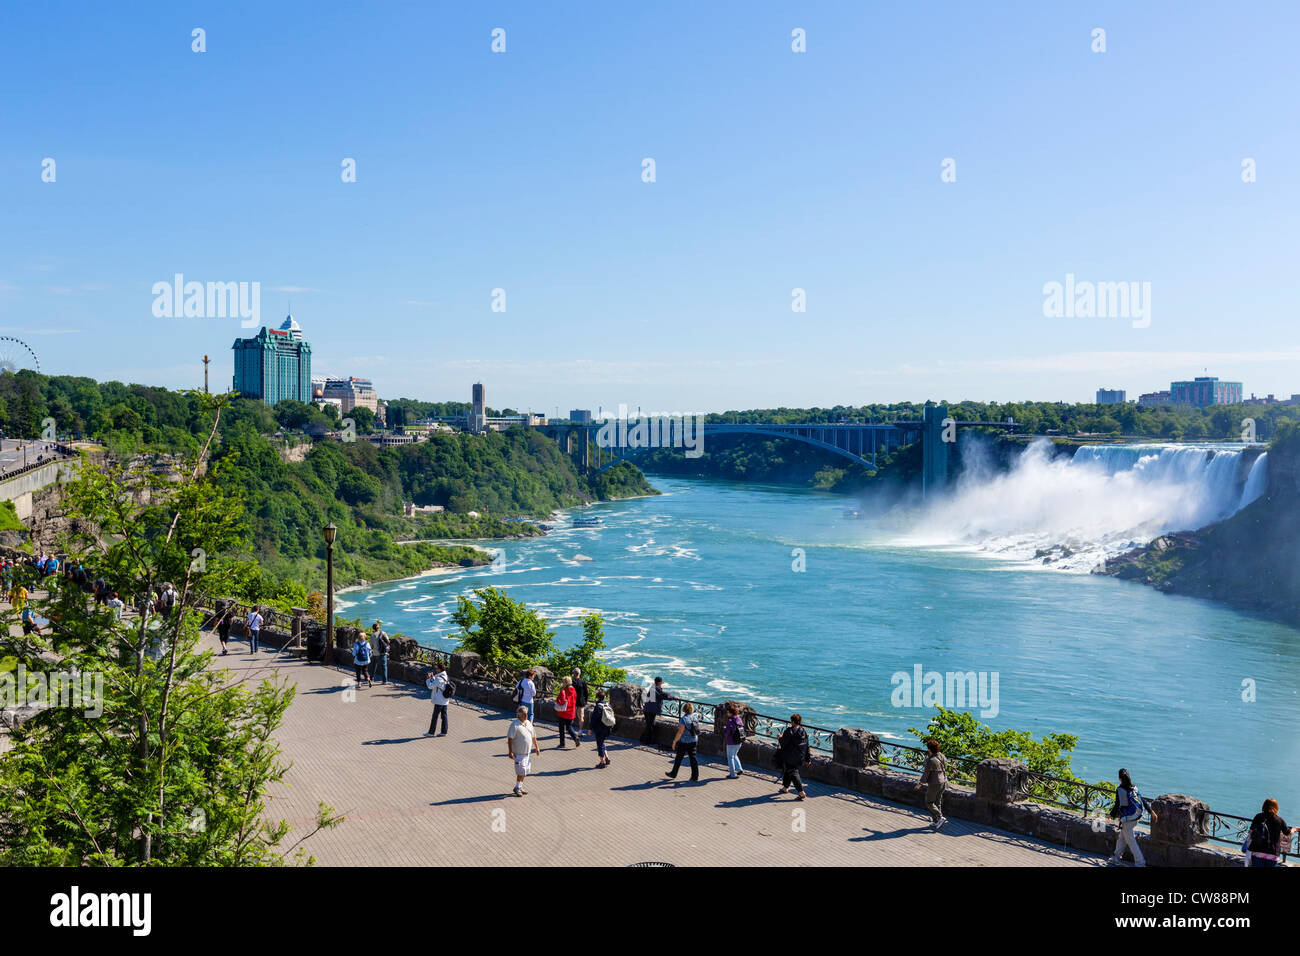 Affichage des touristes theAmerican Falls du côté canadien, Niagara Falls (Ontario), Canada Banque D'Images